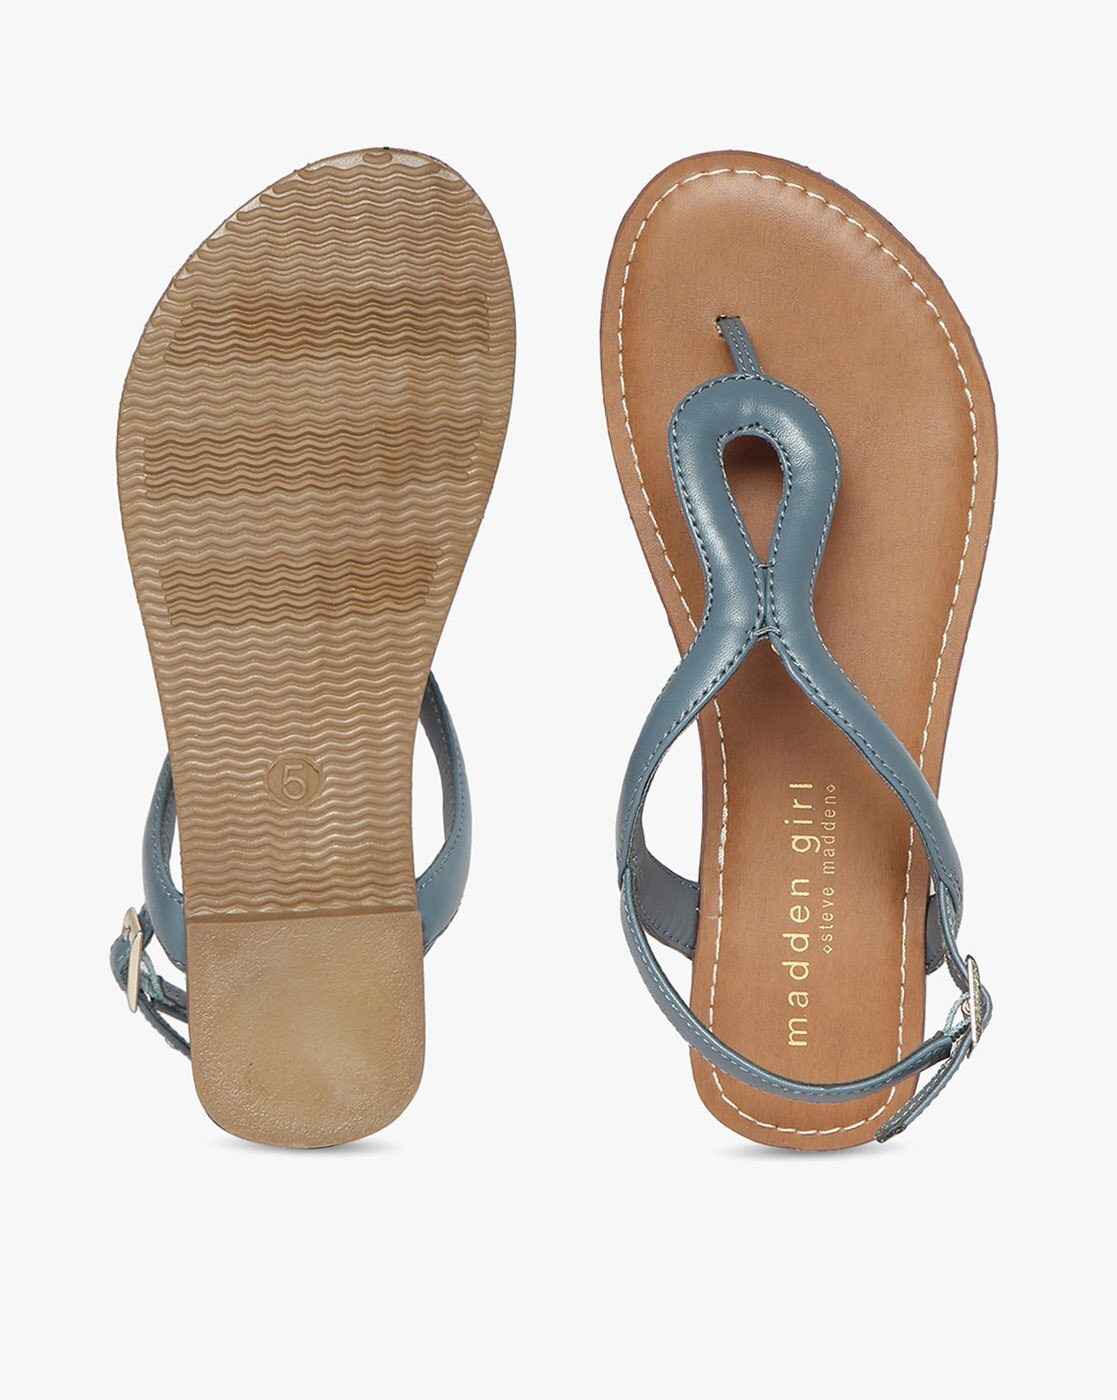 Madden Girl Sandals | Mercari